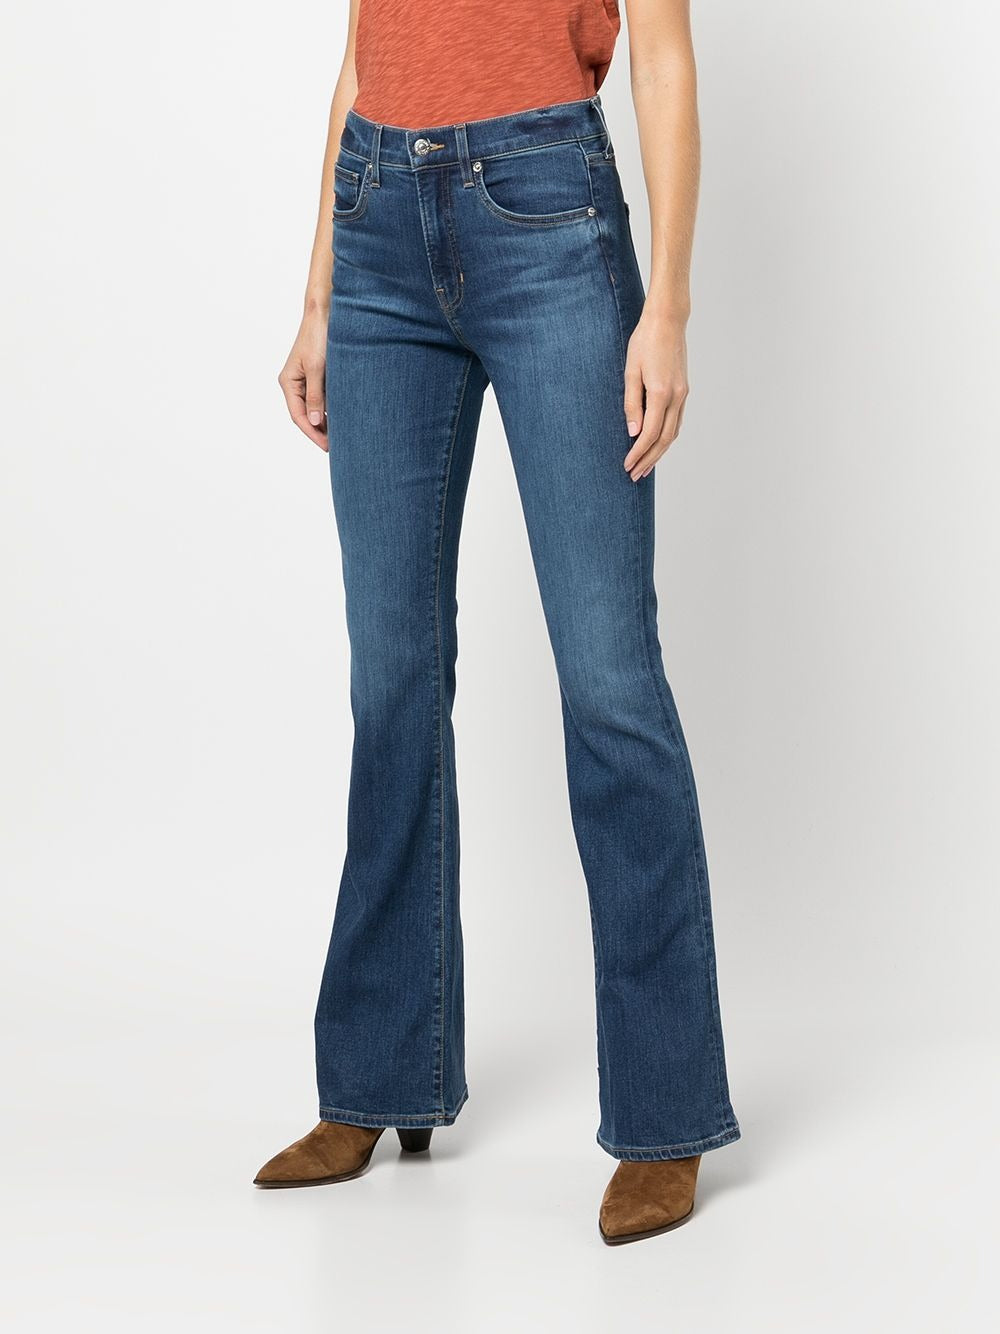 Veronica Beard Beverly High-Rise Skinny Flare Jean in Bright Blue